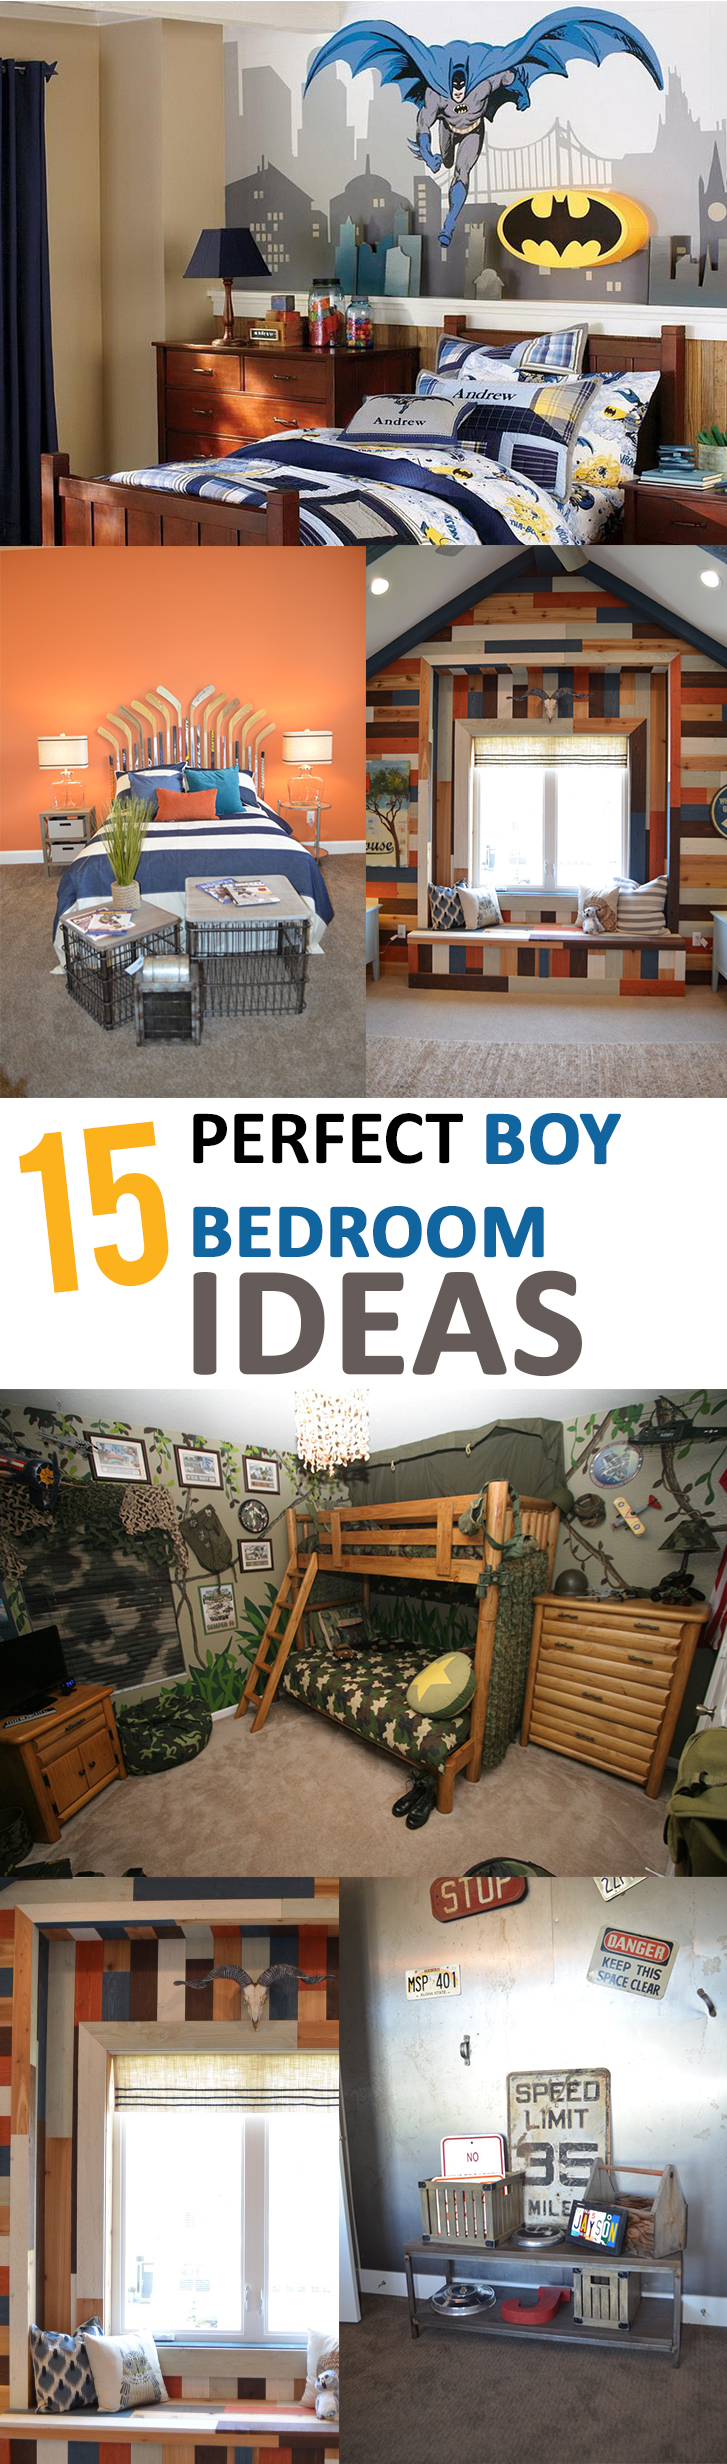 15 Perfect Boy Bedroom Ideas